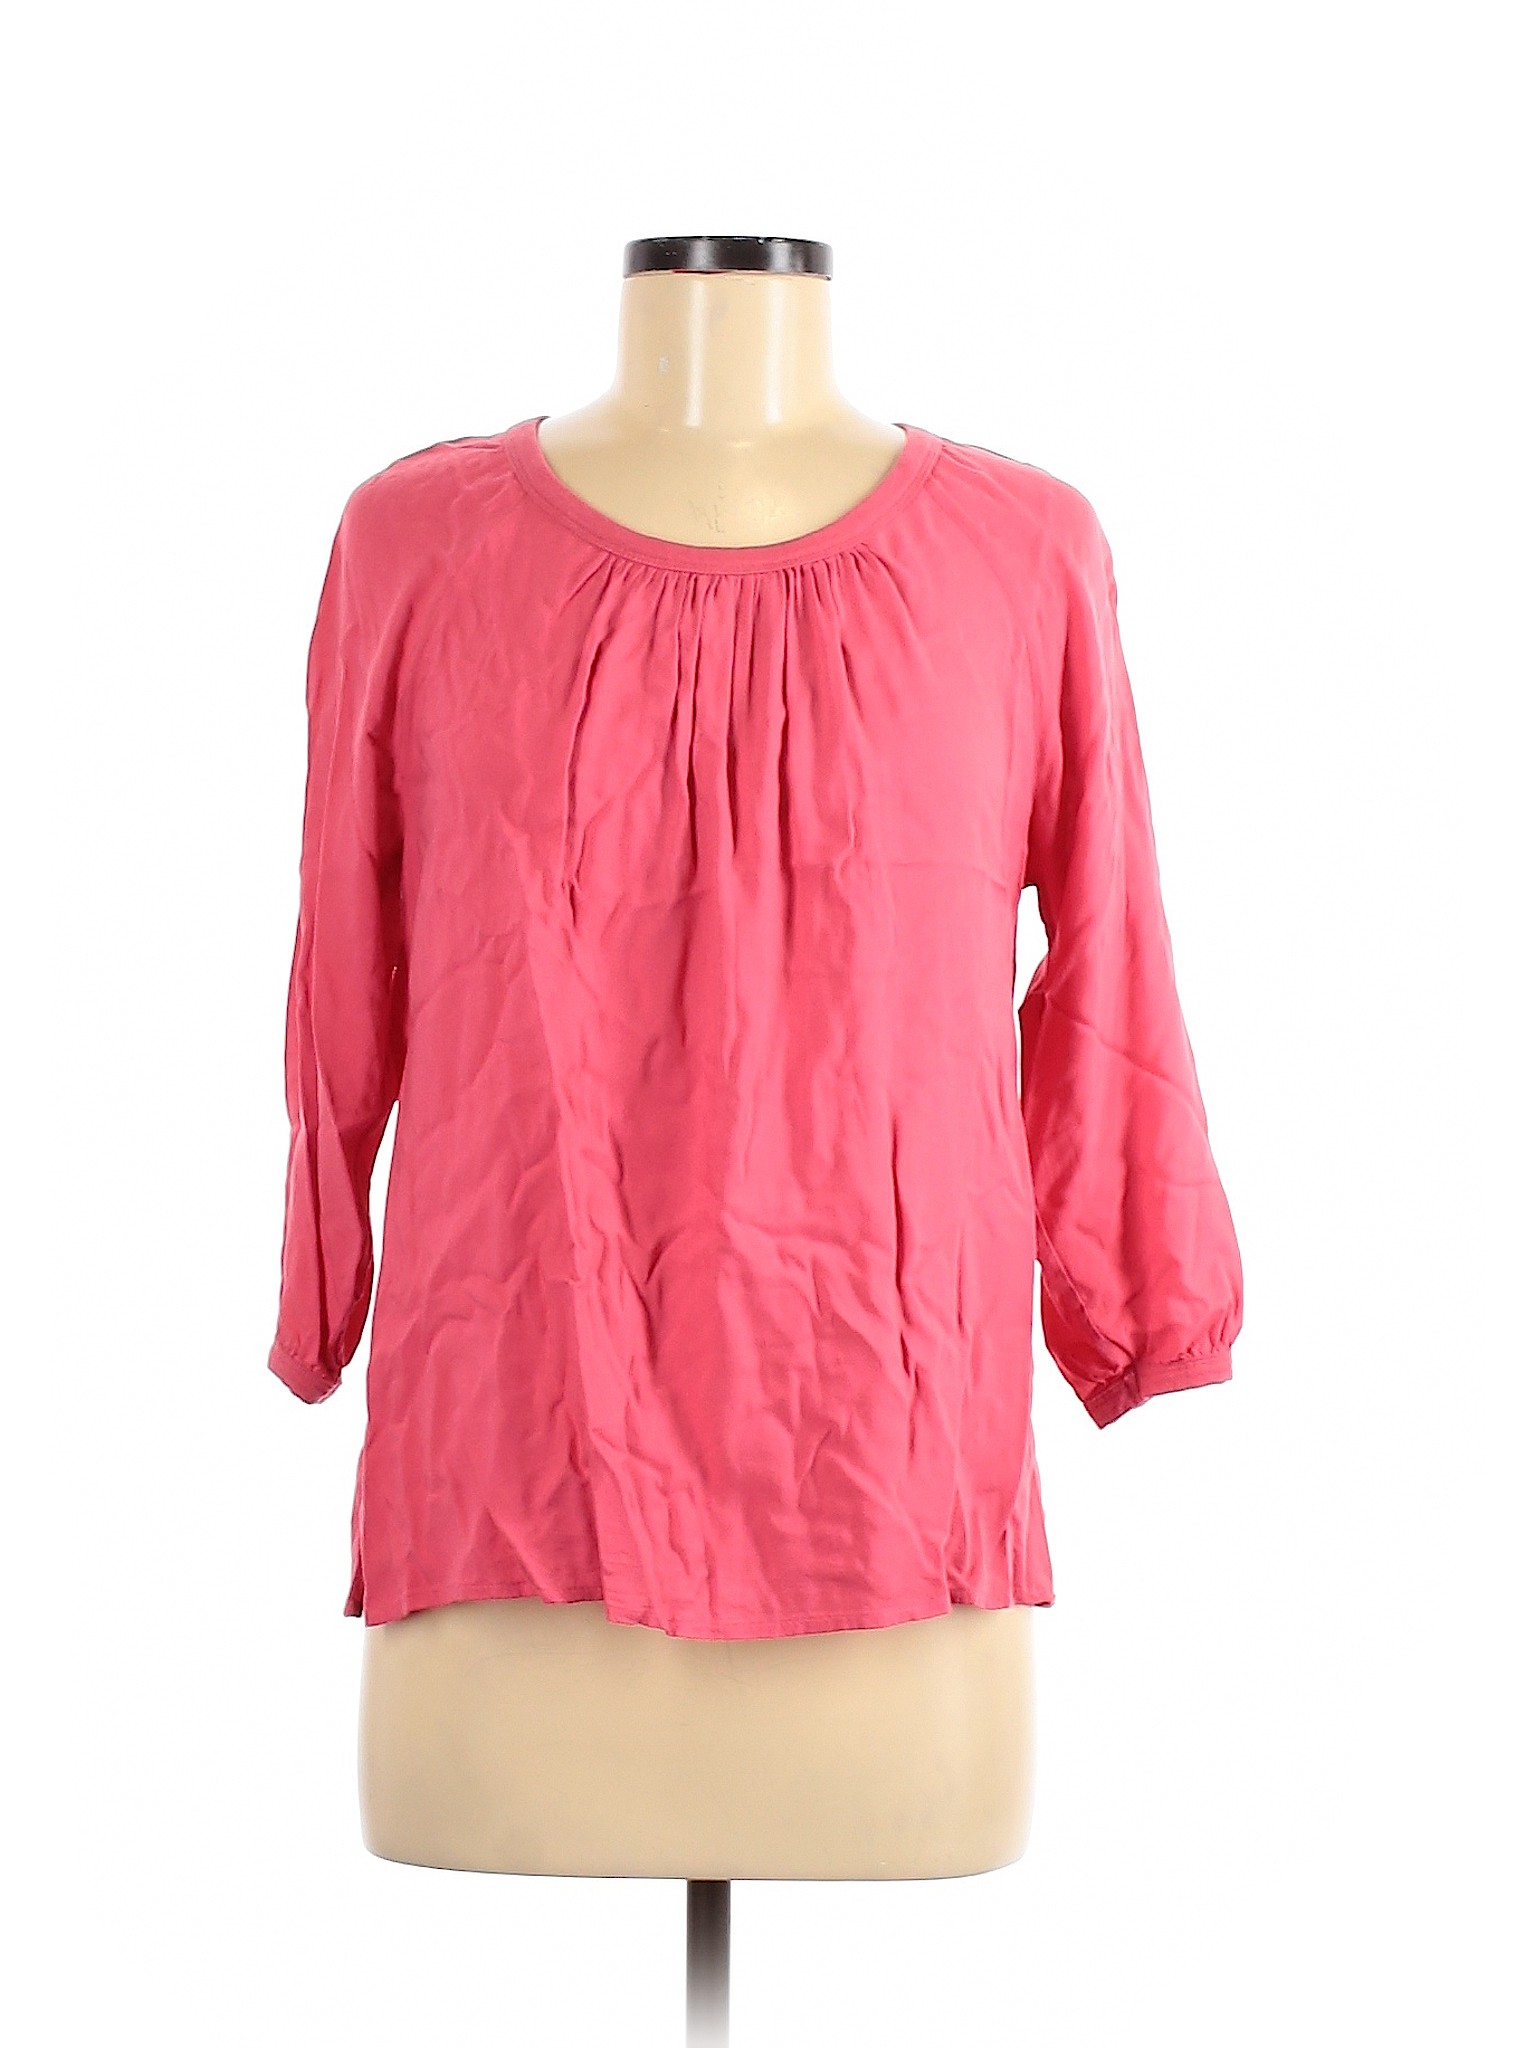 SONOMA life + style Women Pink 3/4 Sleeve Blouse M | eBay